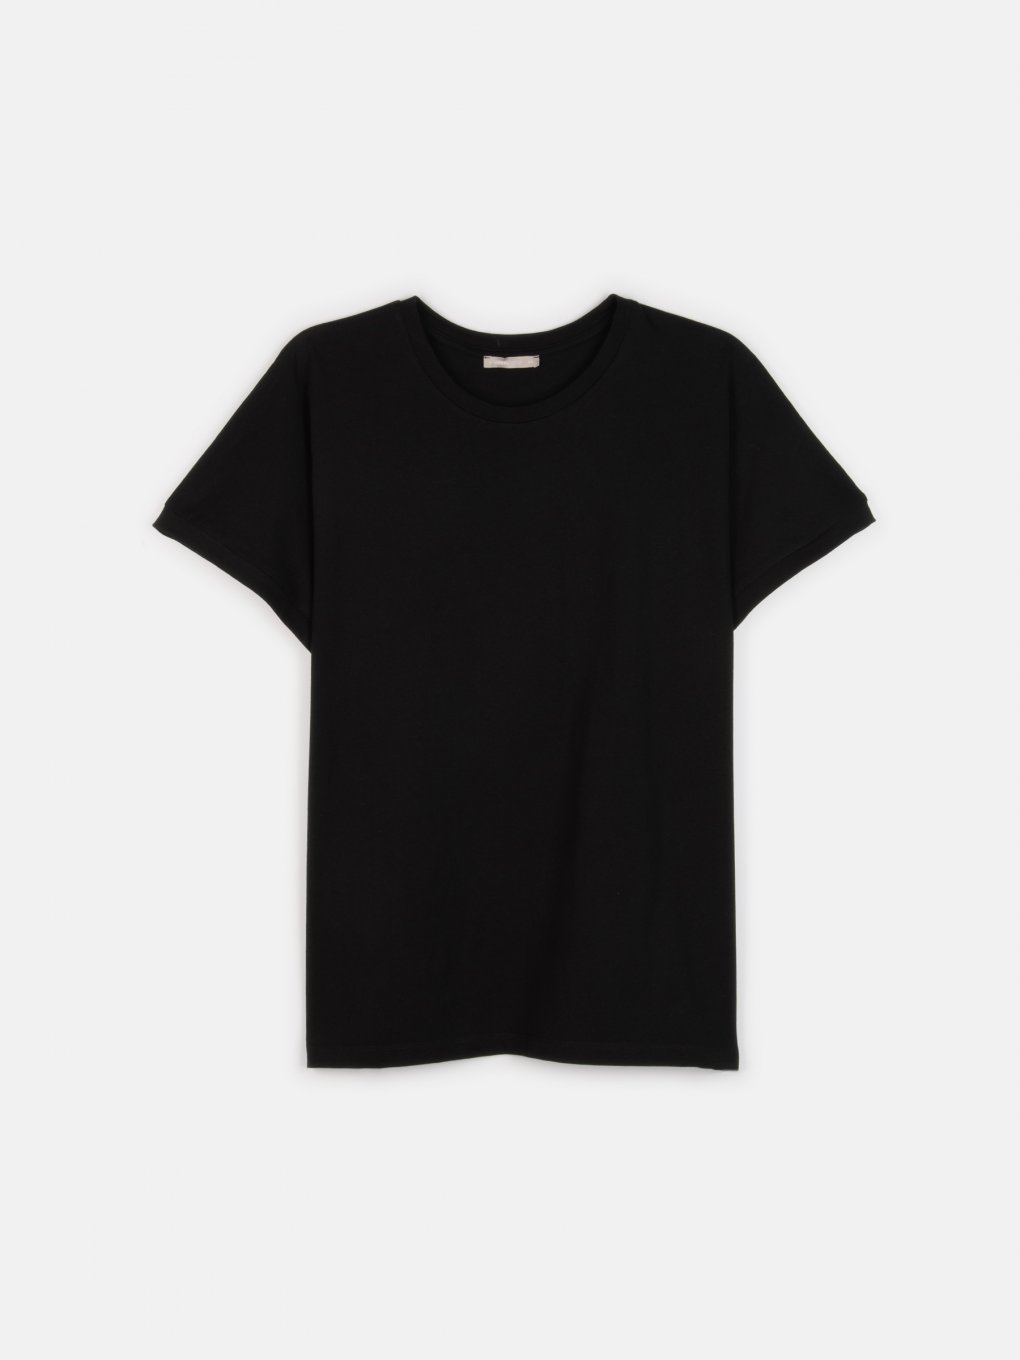 Základné basic bavlnené tričko dámske plus size